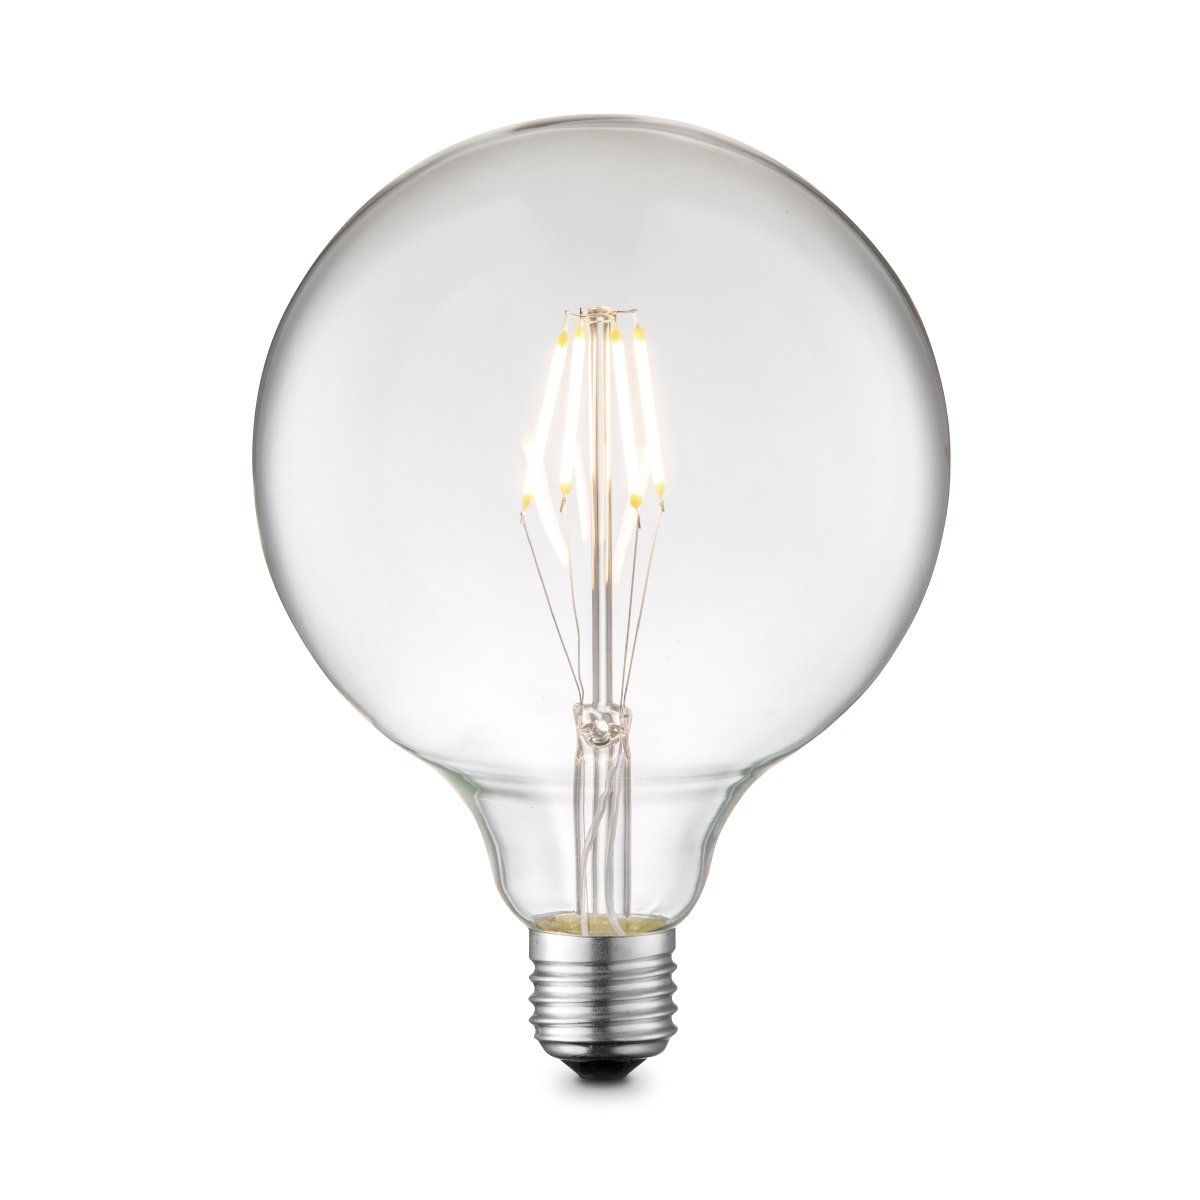 stam Hulpeloosheid hebzuchtig Home sweet home LED lamp Globe G125 E27 4W dimbaar - helder